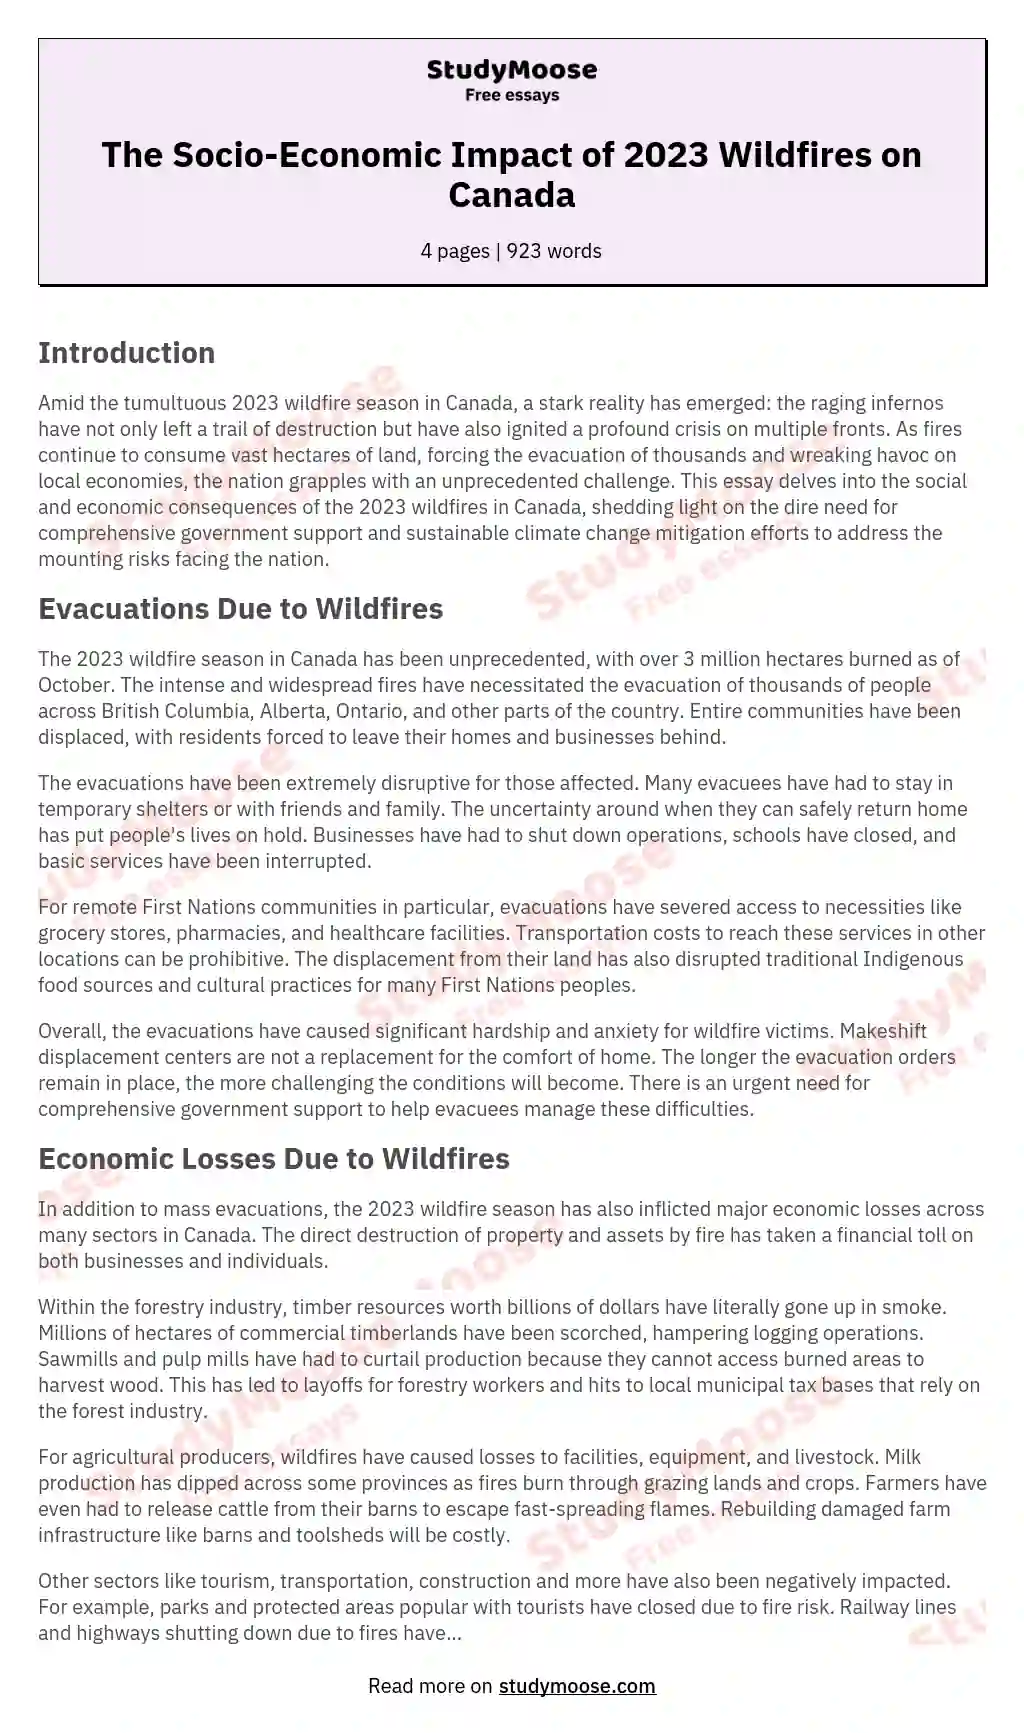 The Socio-Economic Impact of 2023 Wildfires on Canada essay